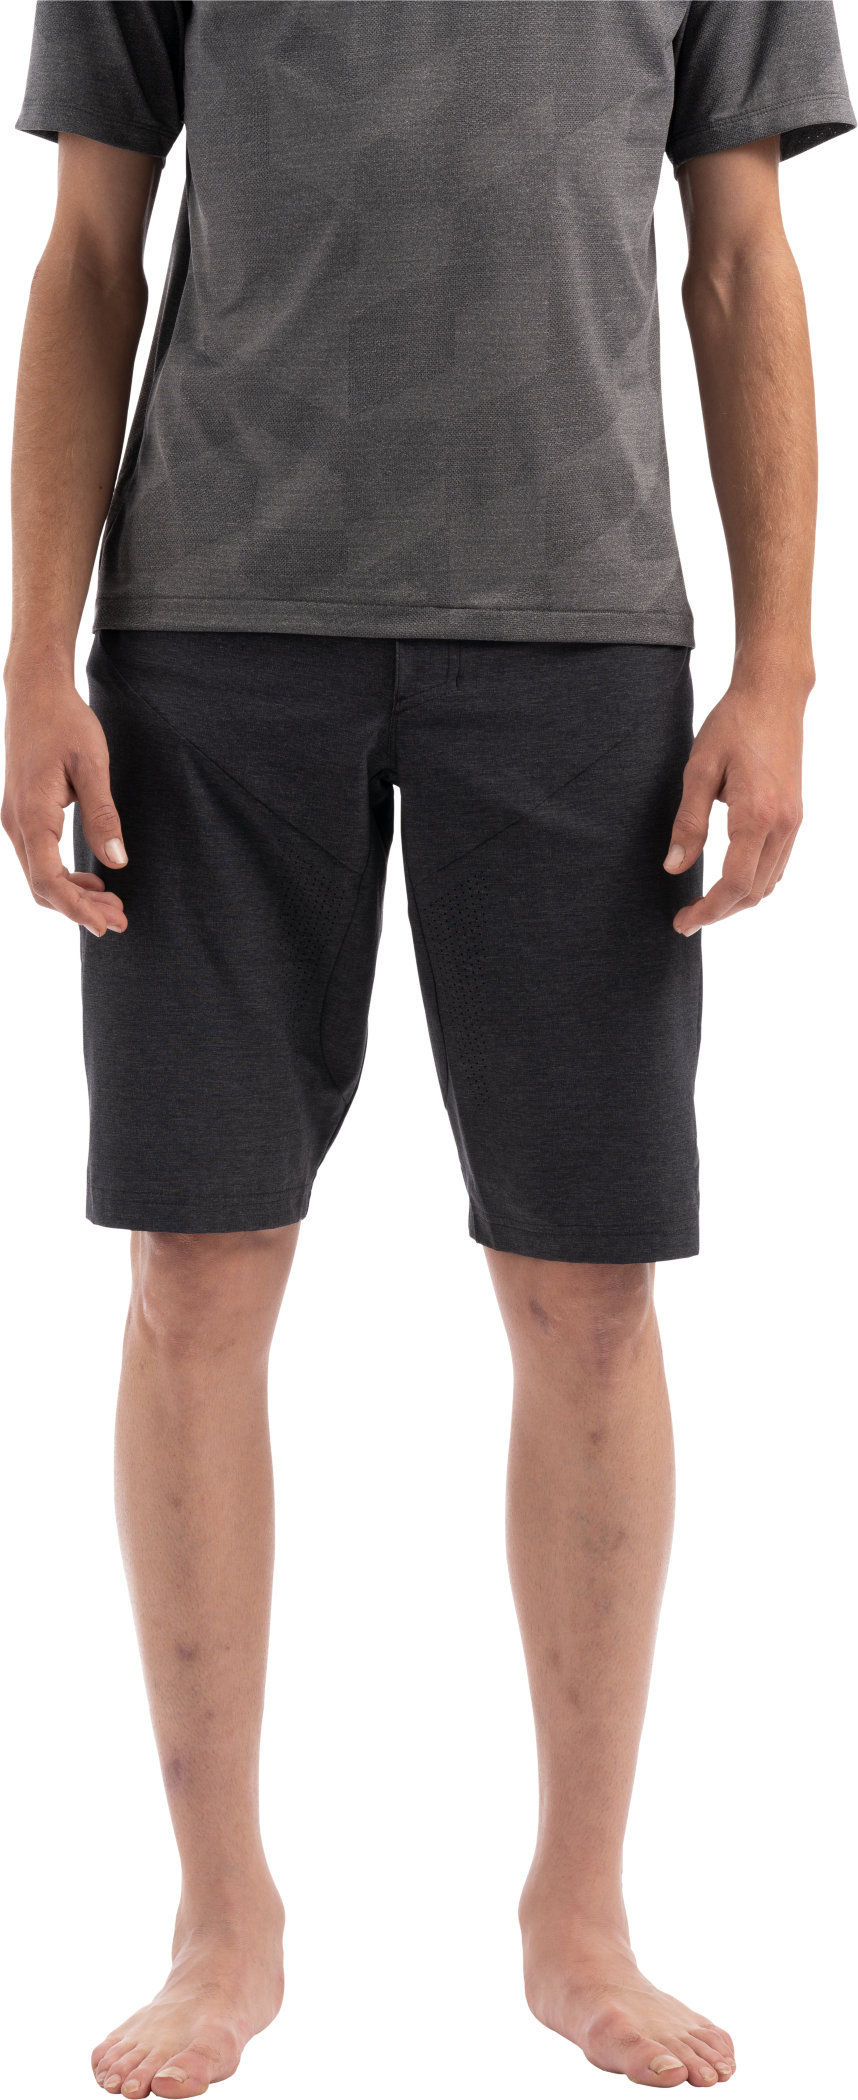 atlas pro shorts